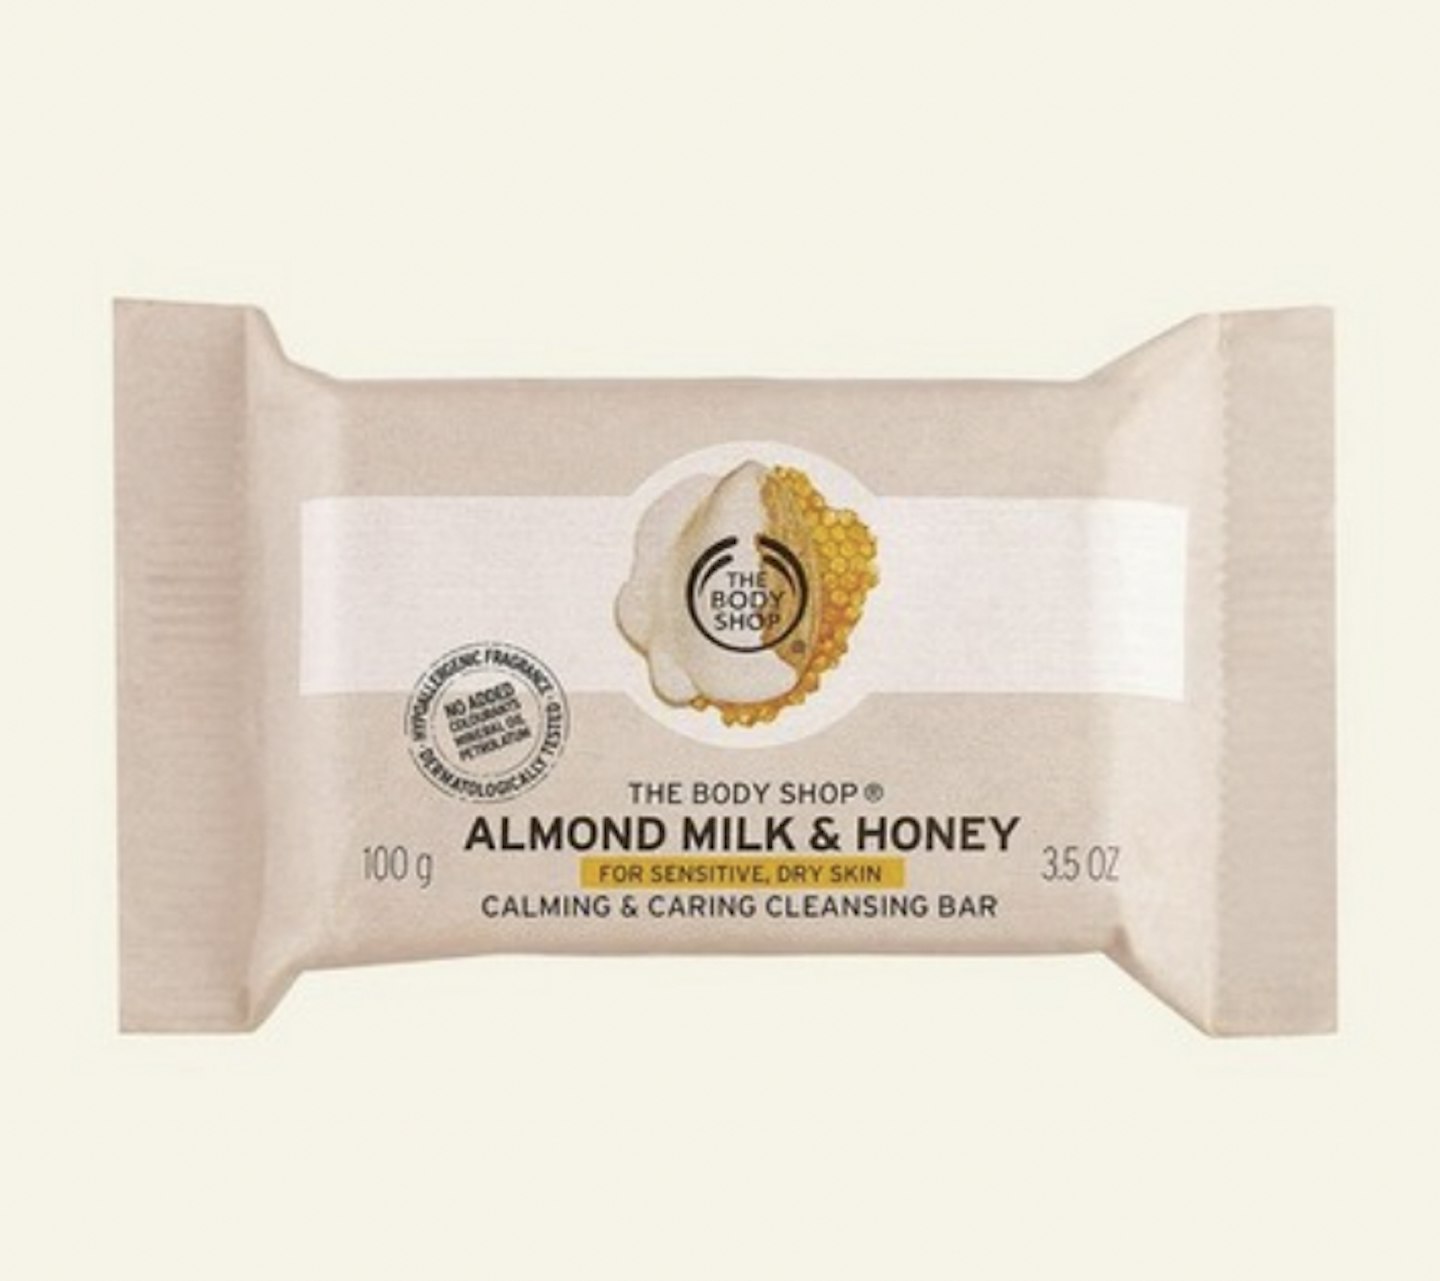 The Body Shop Almond Milk & Honey Soap